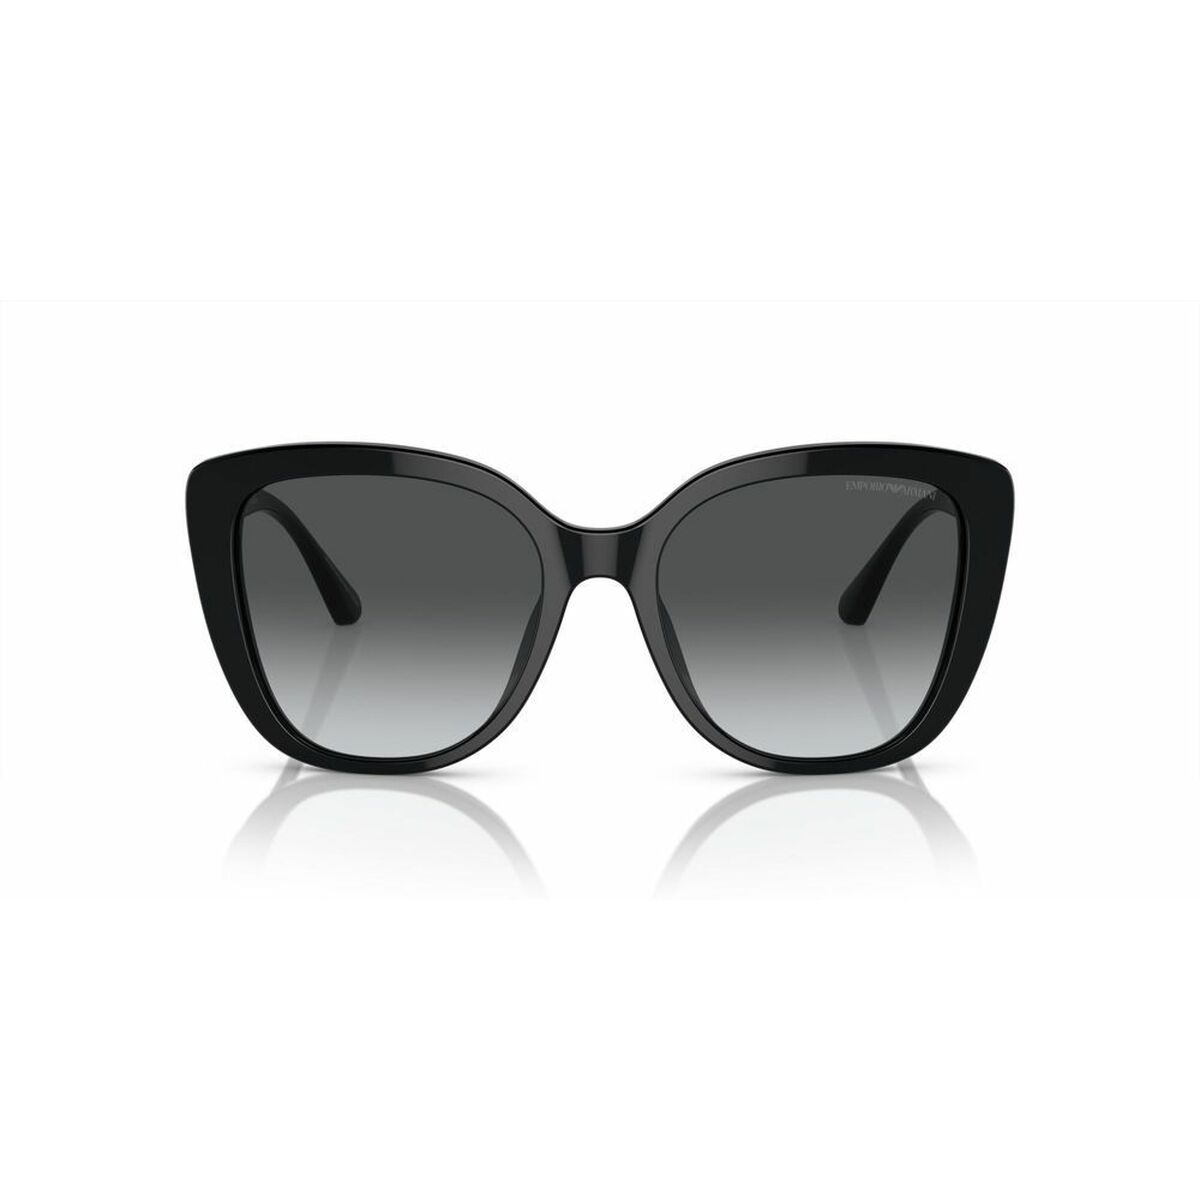 Kaufe Damensonnenbrille Armani EA 4214U bei AWK Flagship um € 226.00